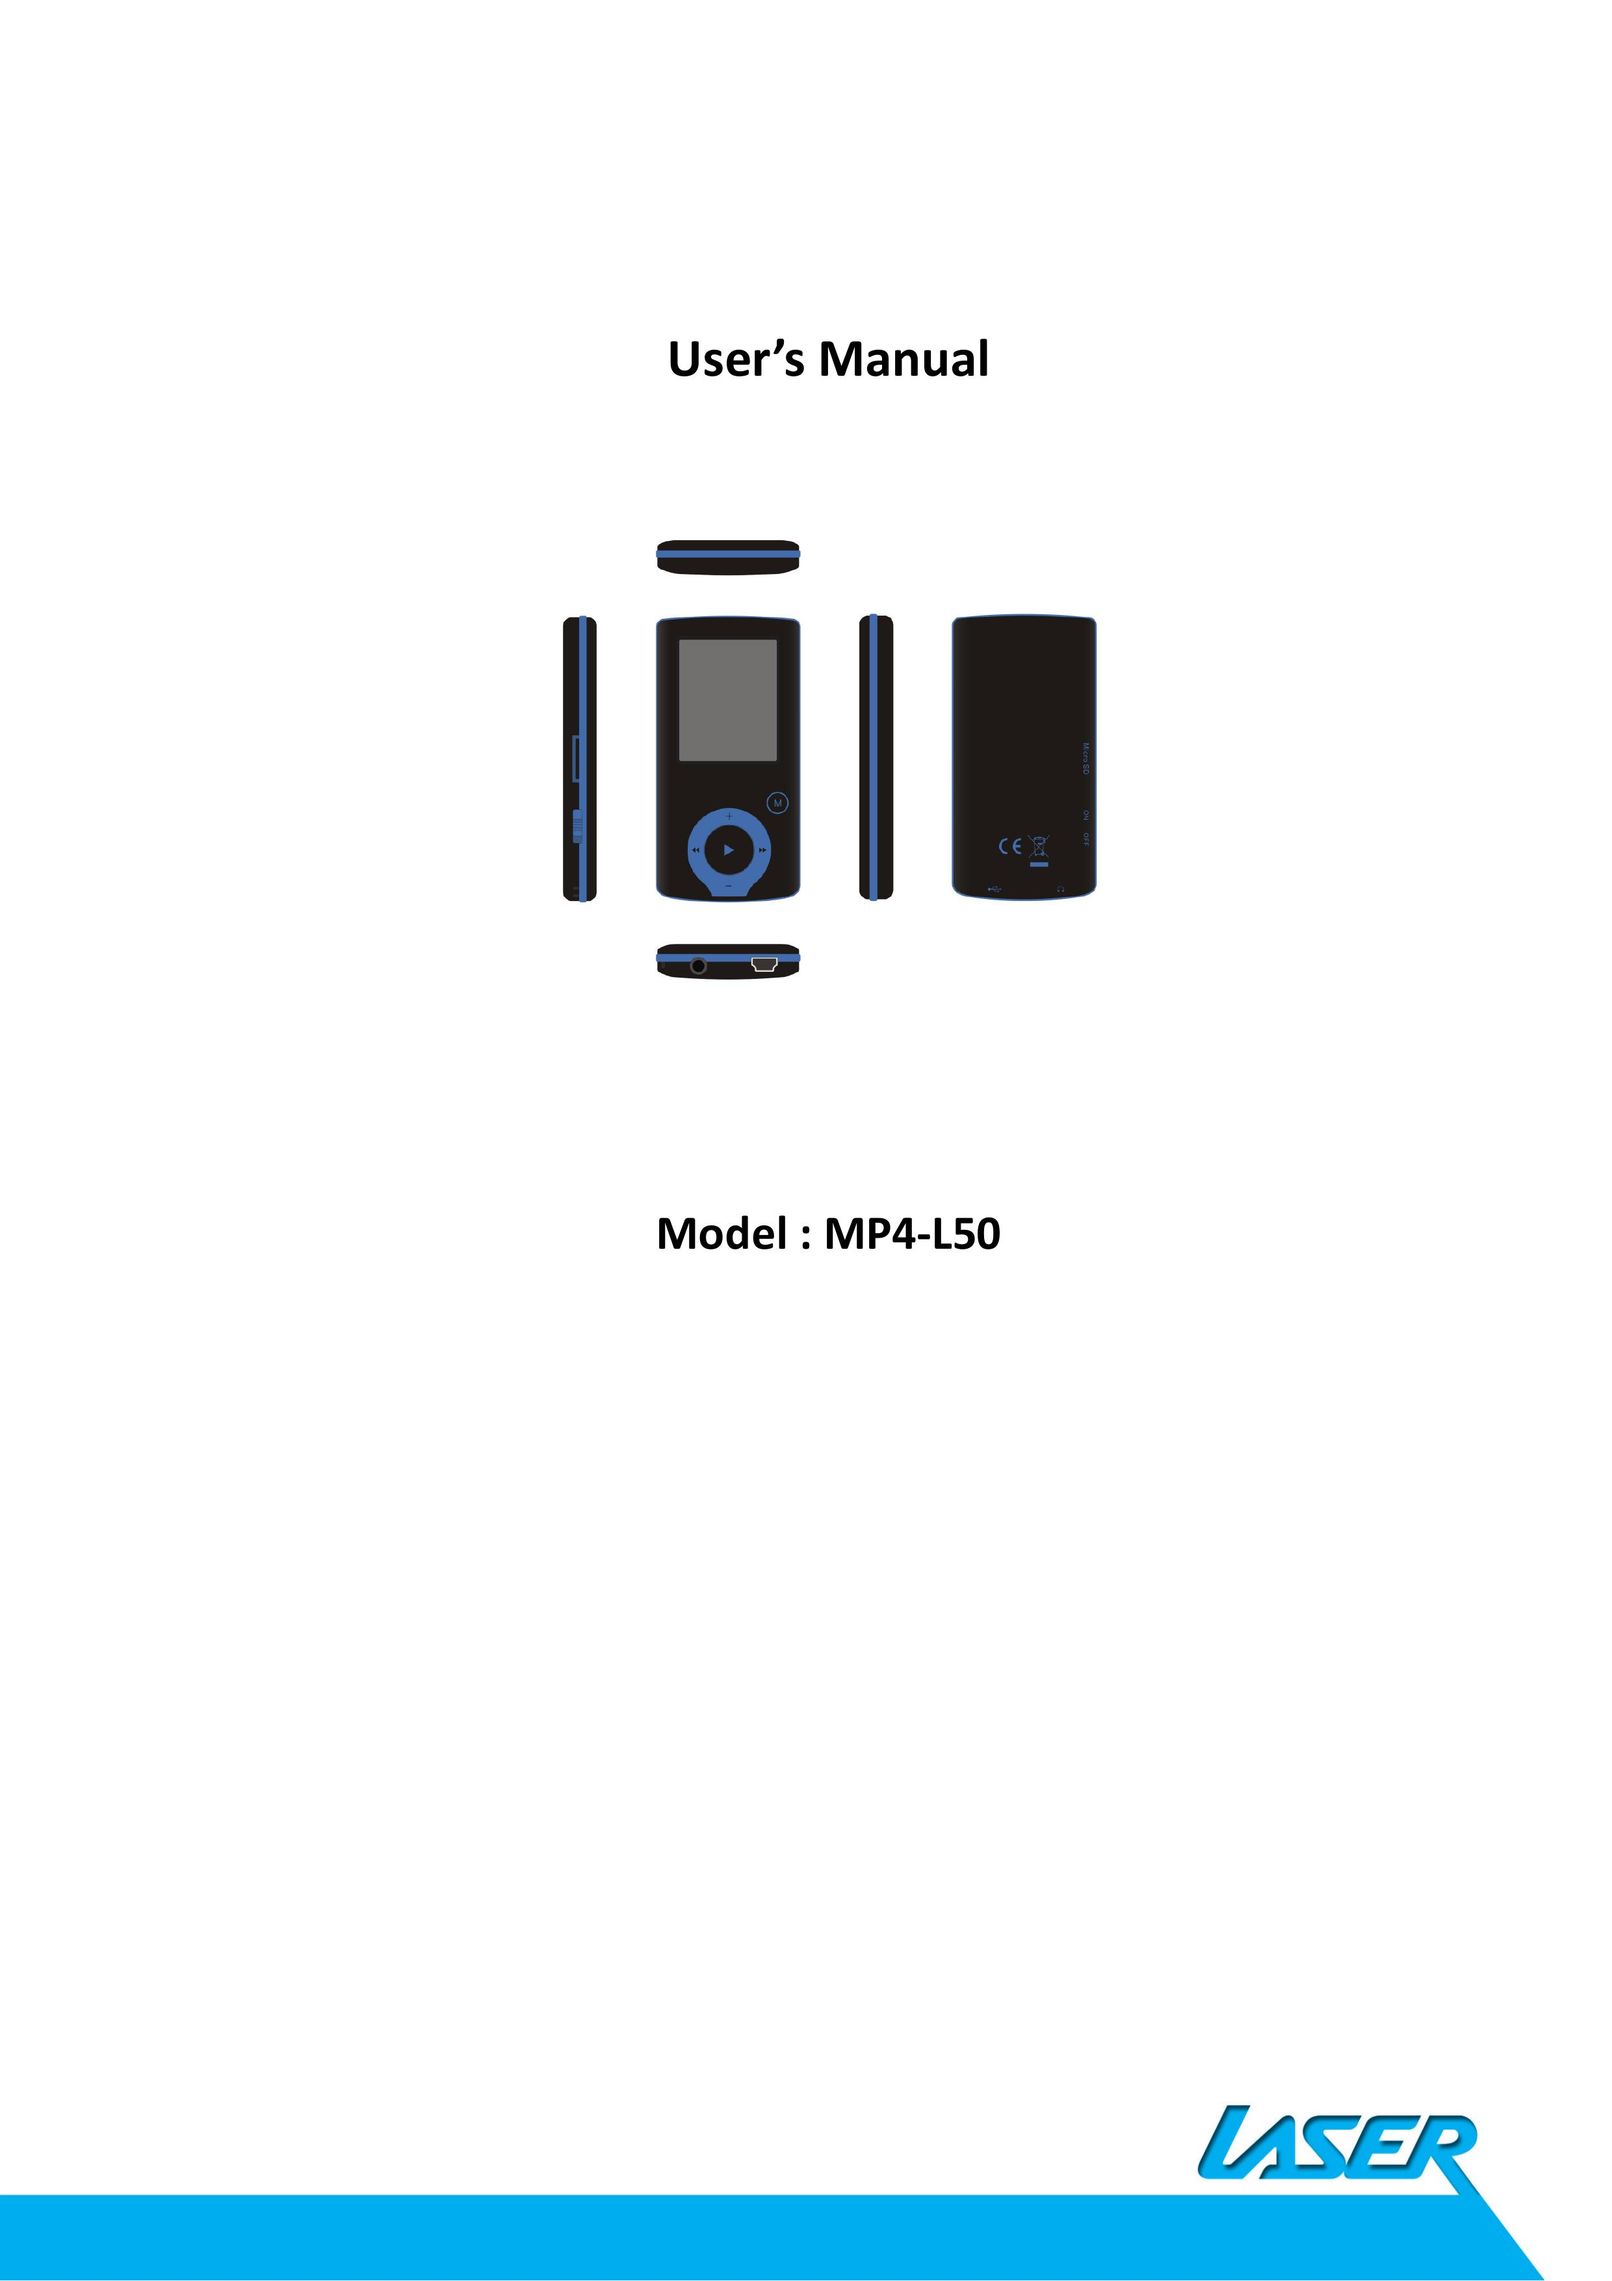 Laser MP4-L50 MP3 Player User Manual